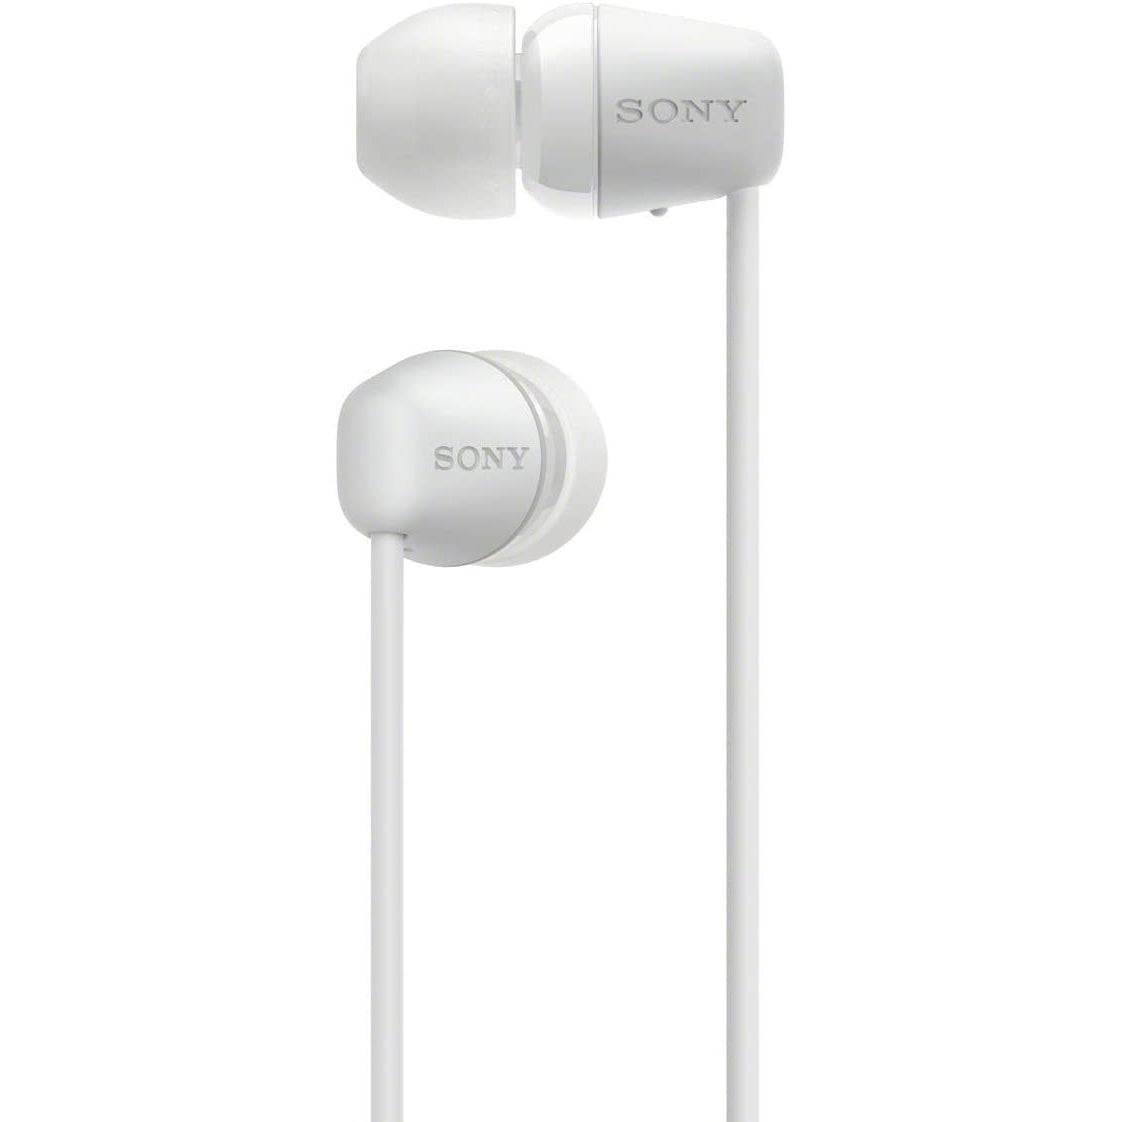 Sony WI-C200 Wireless Bluetooth Headphones with Mic - White - Pristine